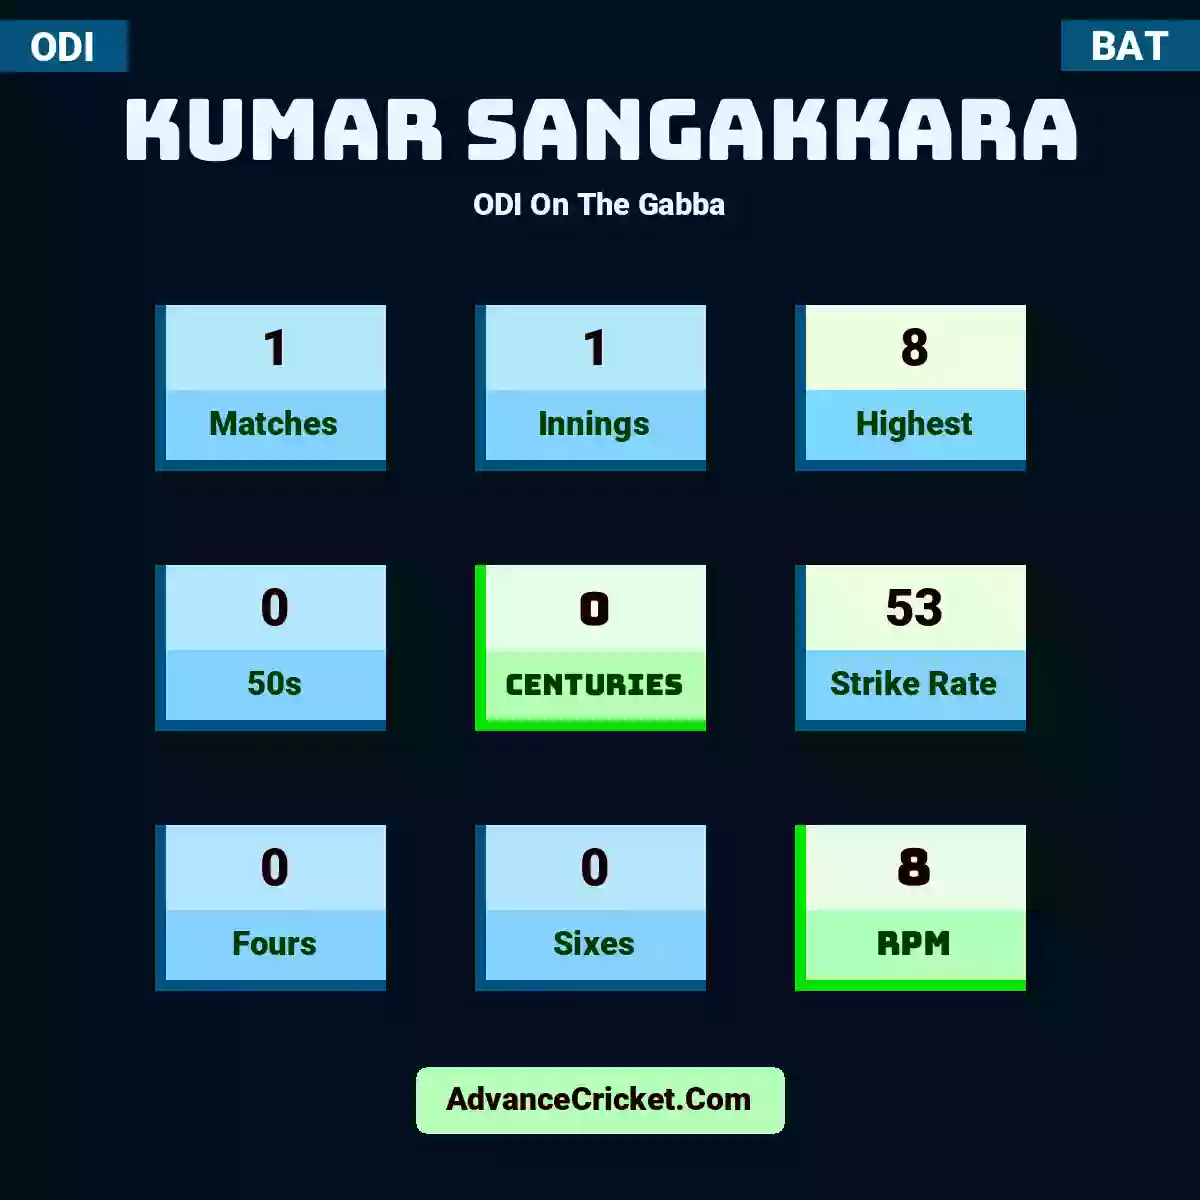 Kumar Sangakkara ODI  On The Gabba, Kumar Sangakkara played 1 matches, scored 8 runs as highest, 0 half-centuries, and 0 centuries, with a strike rate of 53. K.Sangakkara hit 0 fours and 0 sixes, with an RPM of 8.